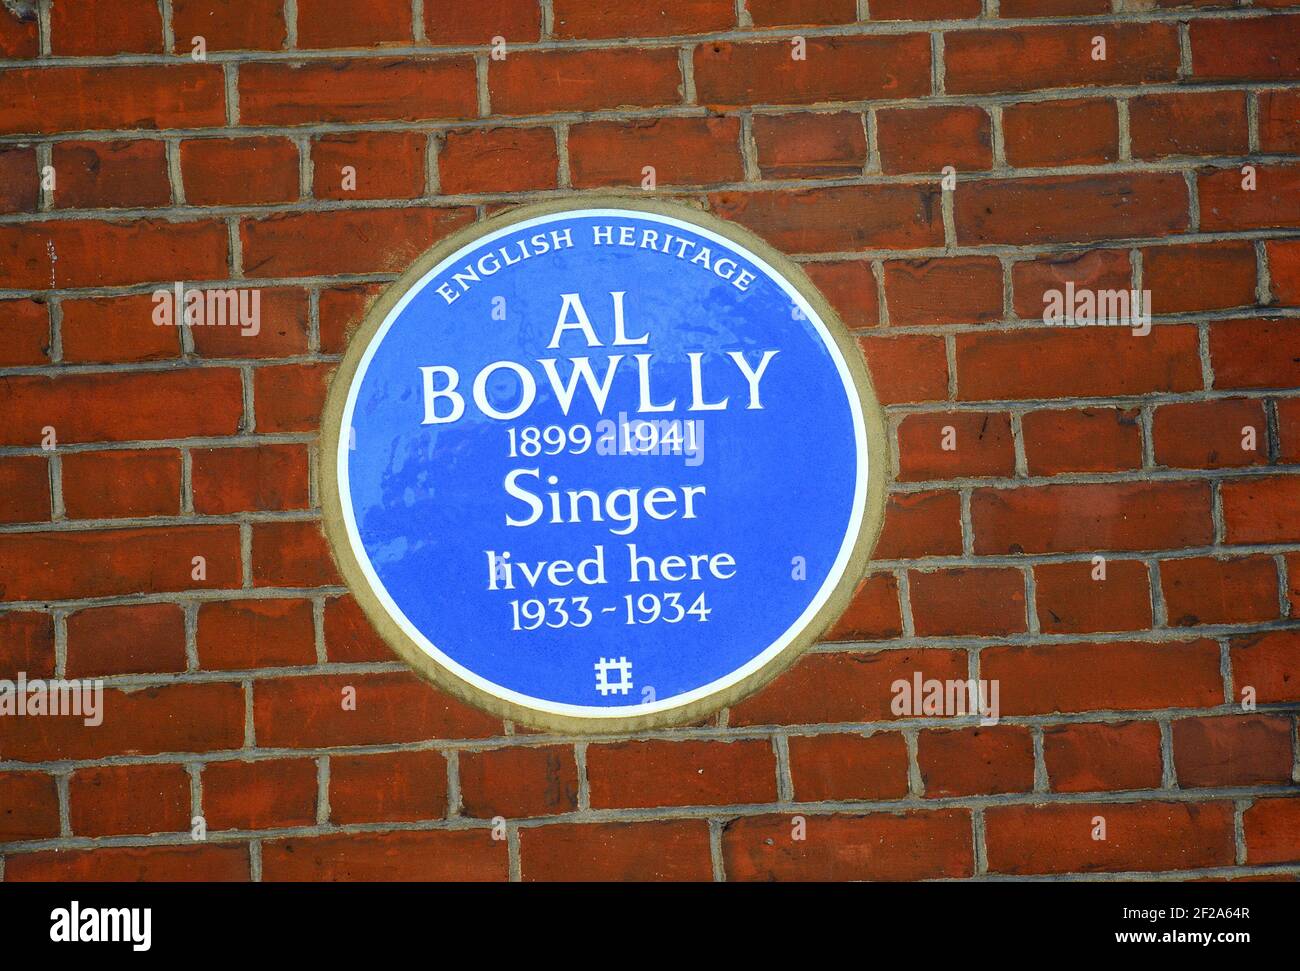 London, Großbritannien. Gedenktafel: 'AL BOWLLY 1899-1941 Singer lebte hier 1933-1934' in Charing Cross Mansions, 26 Charing Cross Road, WC2H Stockfoto